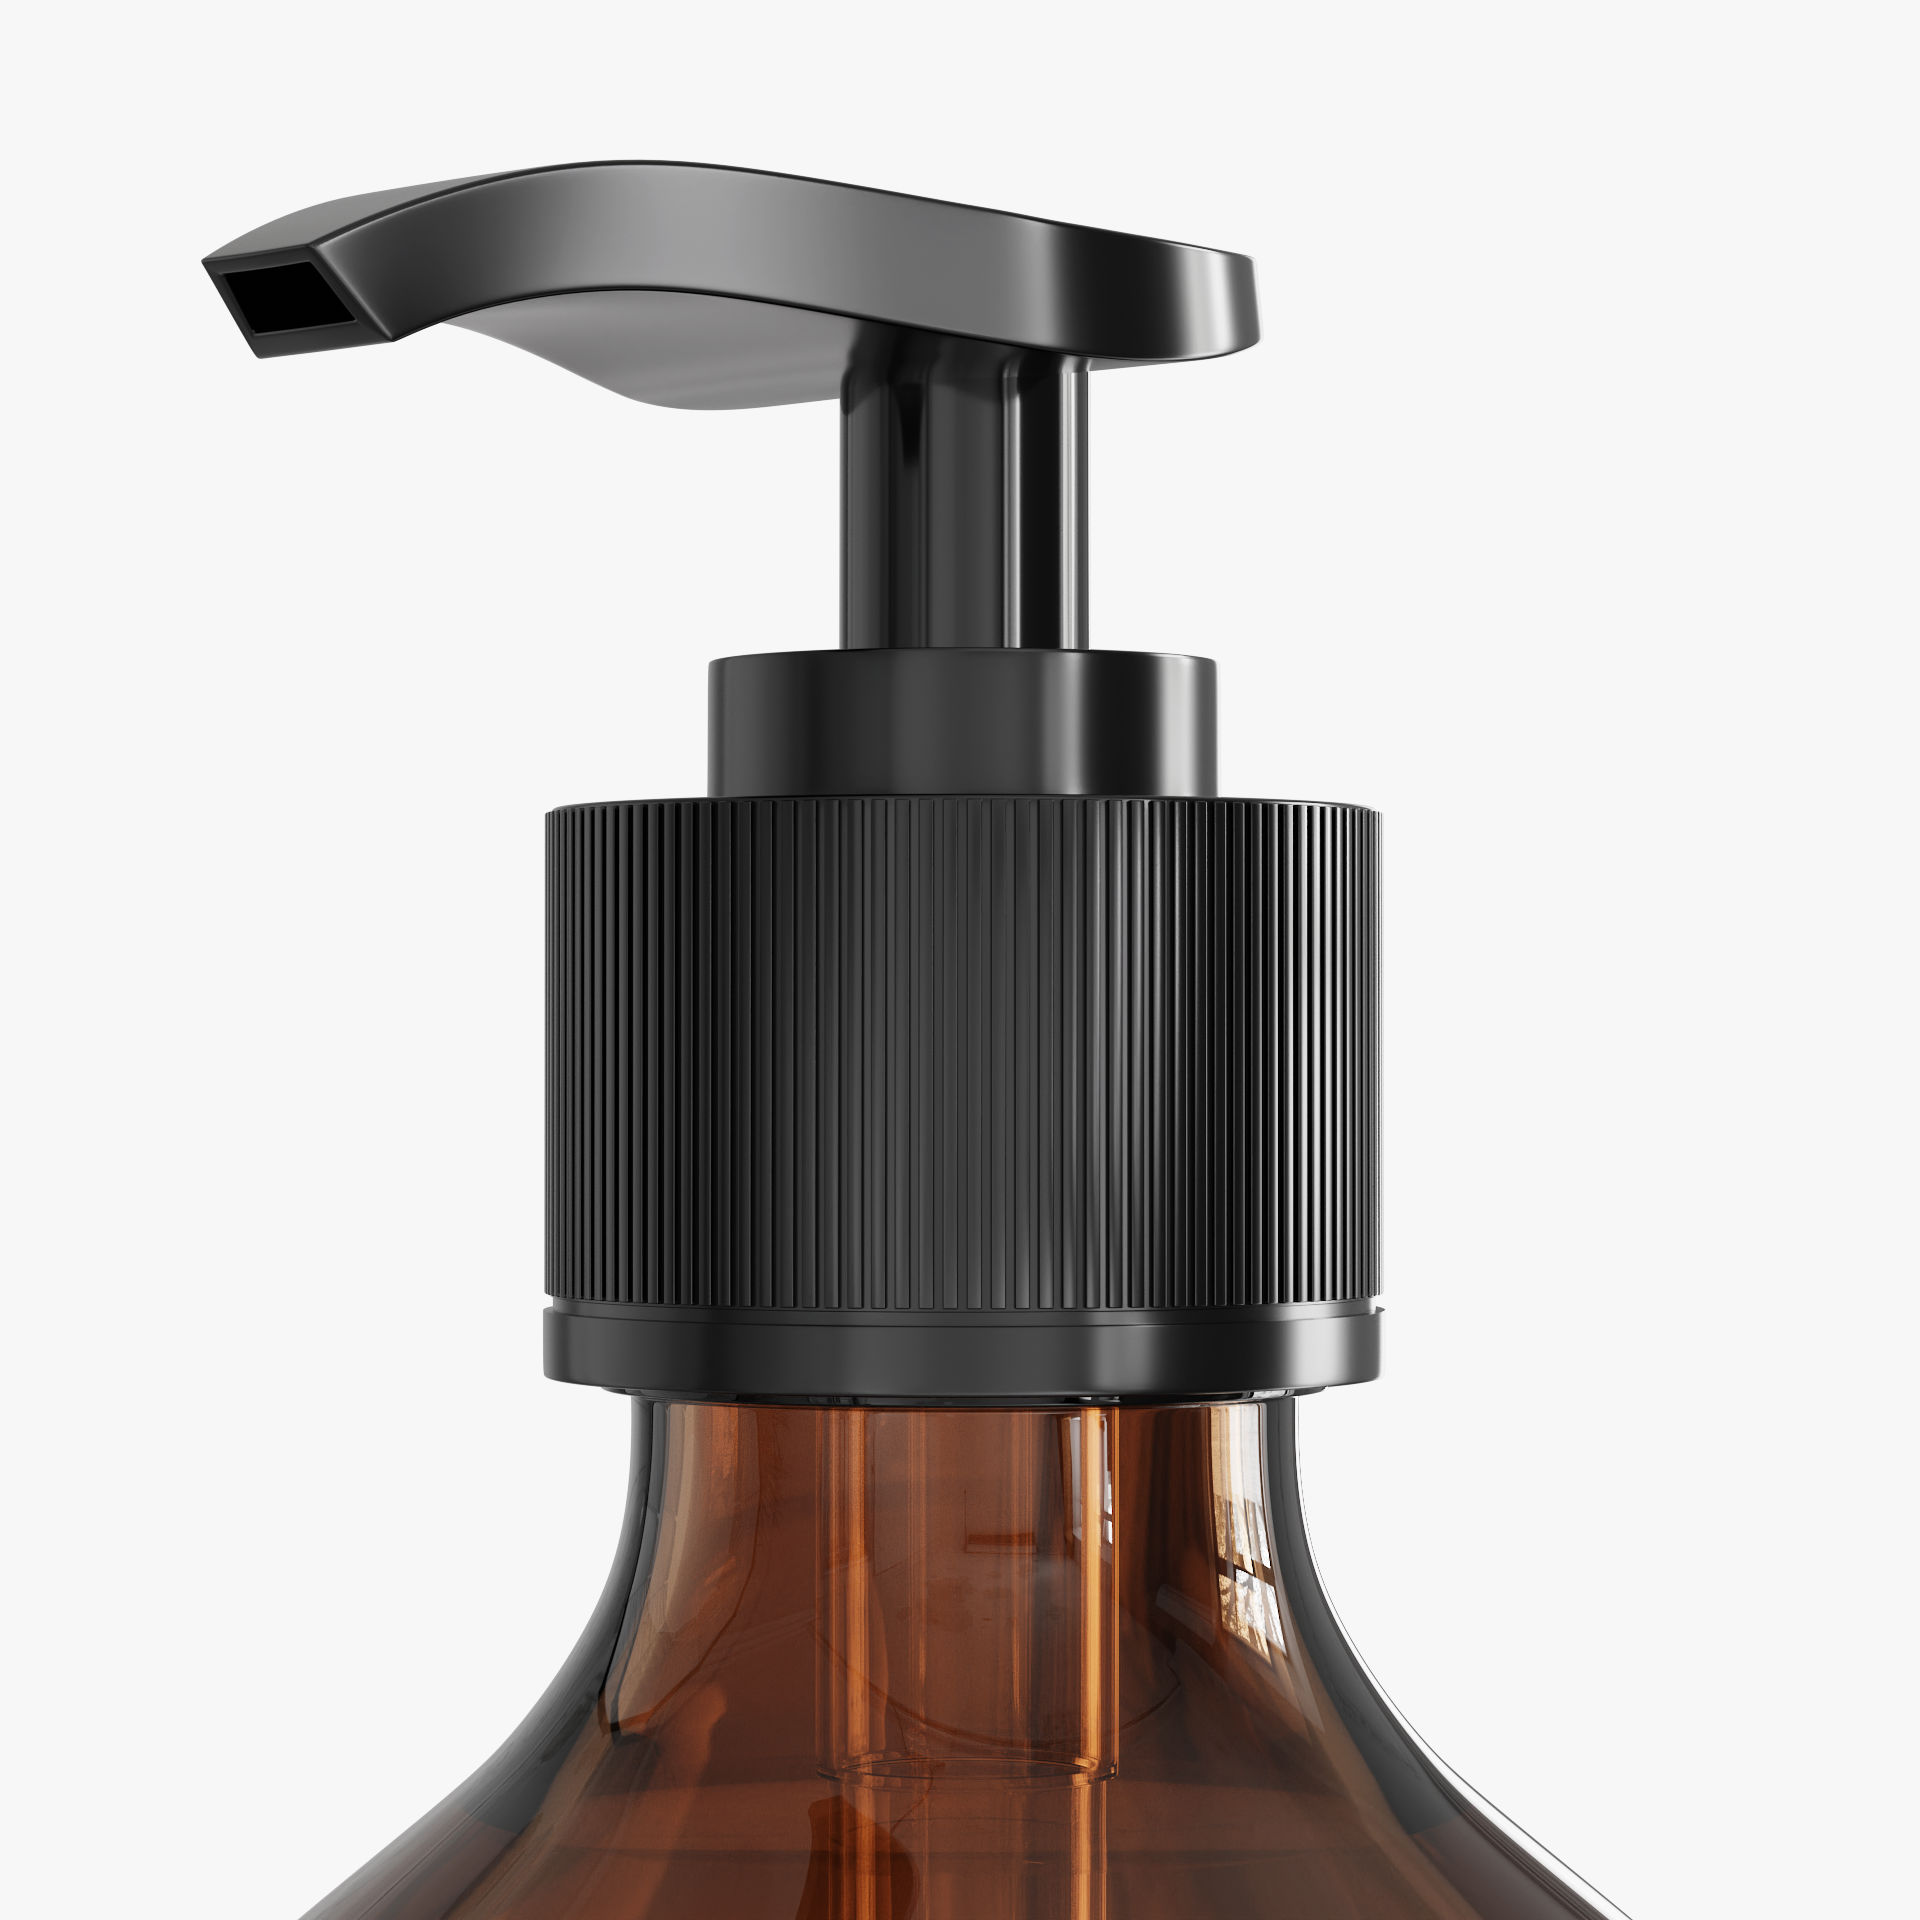 Stemlab Body Wash ProductShot 03 - Stemlab Retialising Body Wash and Hand Wash CGI product shooting - Sonny Nguyen